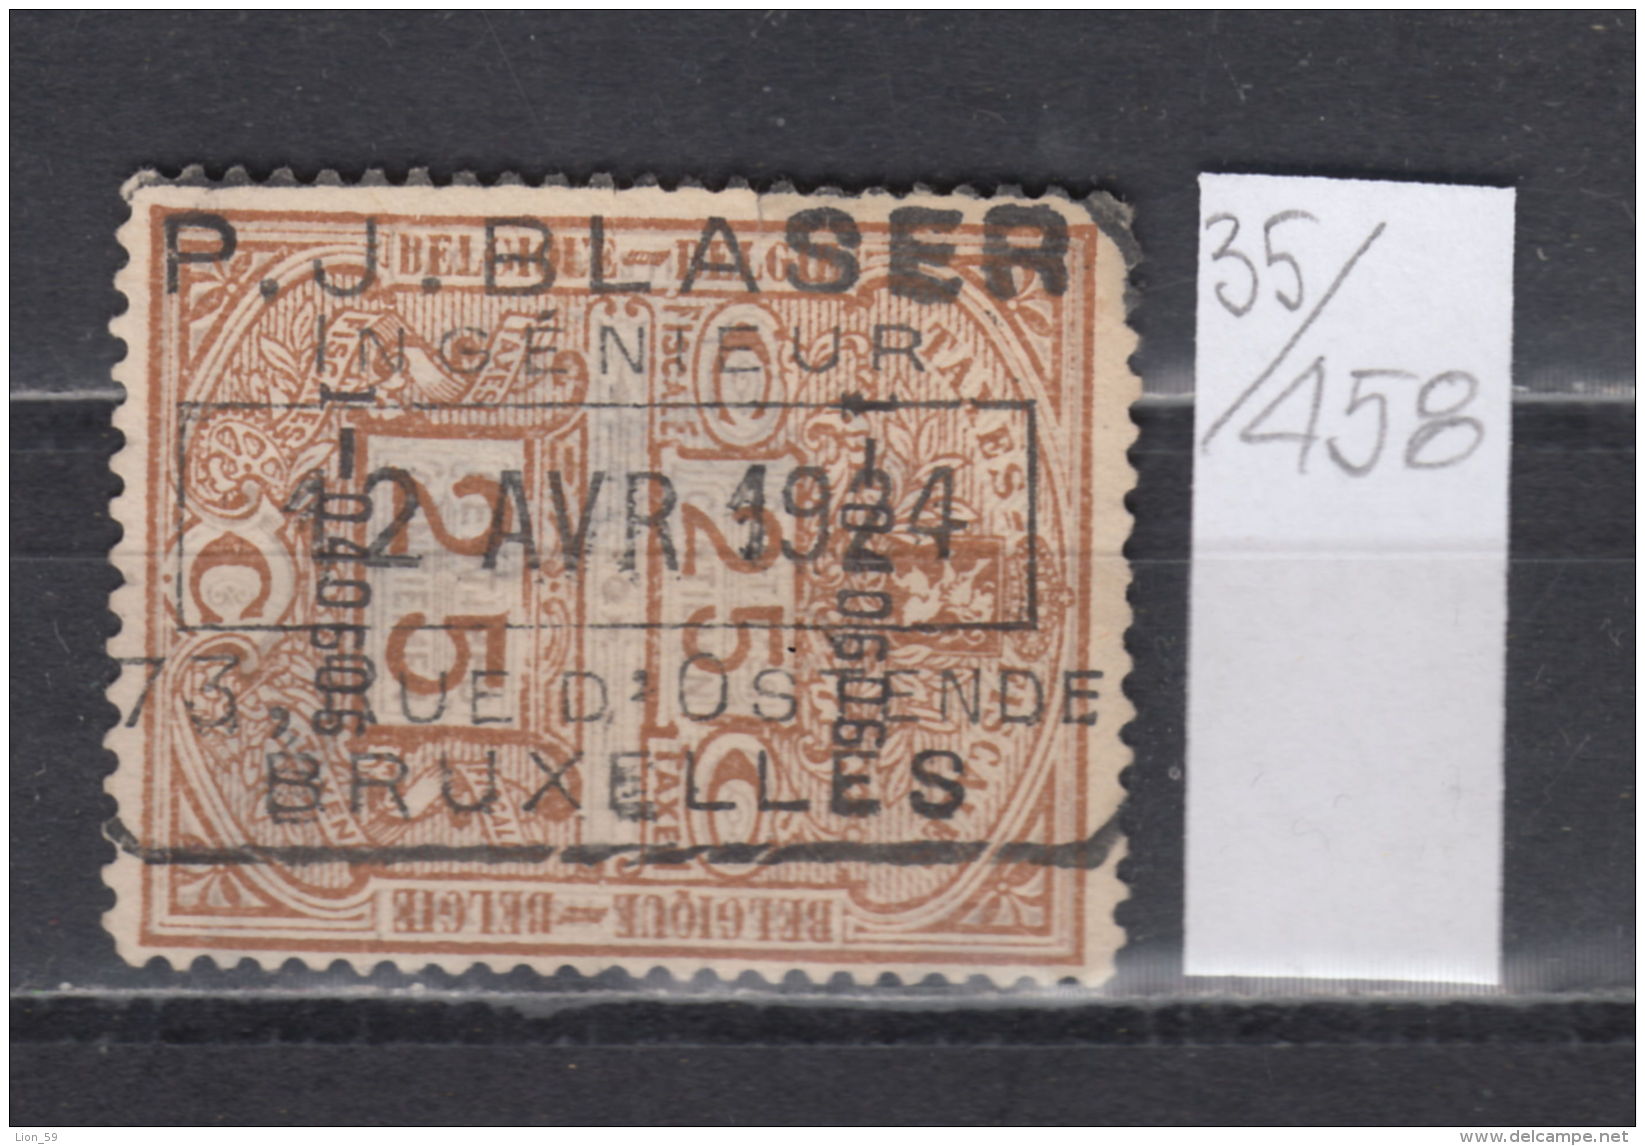 35K458 / 1924 - 25 C. TAXES FISCALES , RAILWAY P.J. BLASER - BRUXELLES , Revenue Fiscaux Steuermarken , Belgique Belgium - Sellos